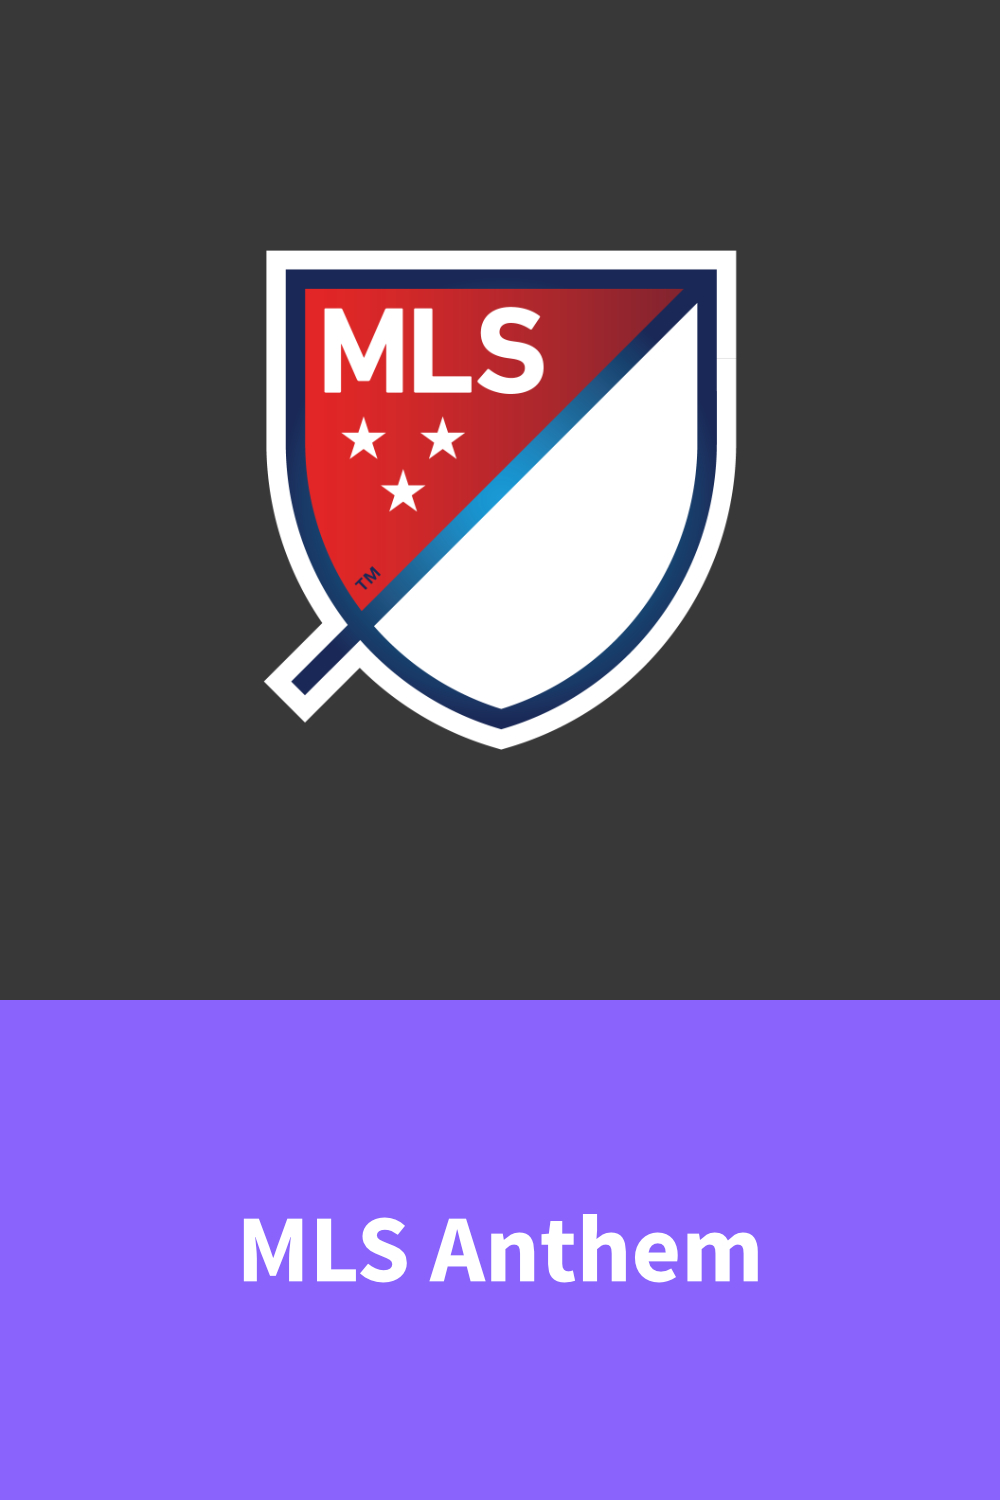 MLS Anthem